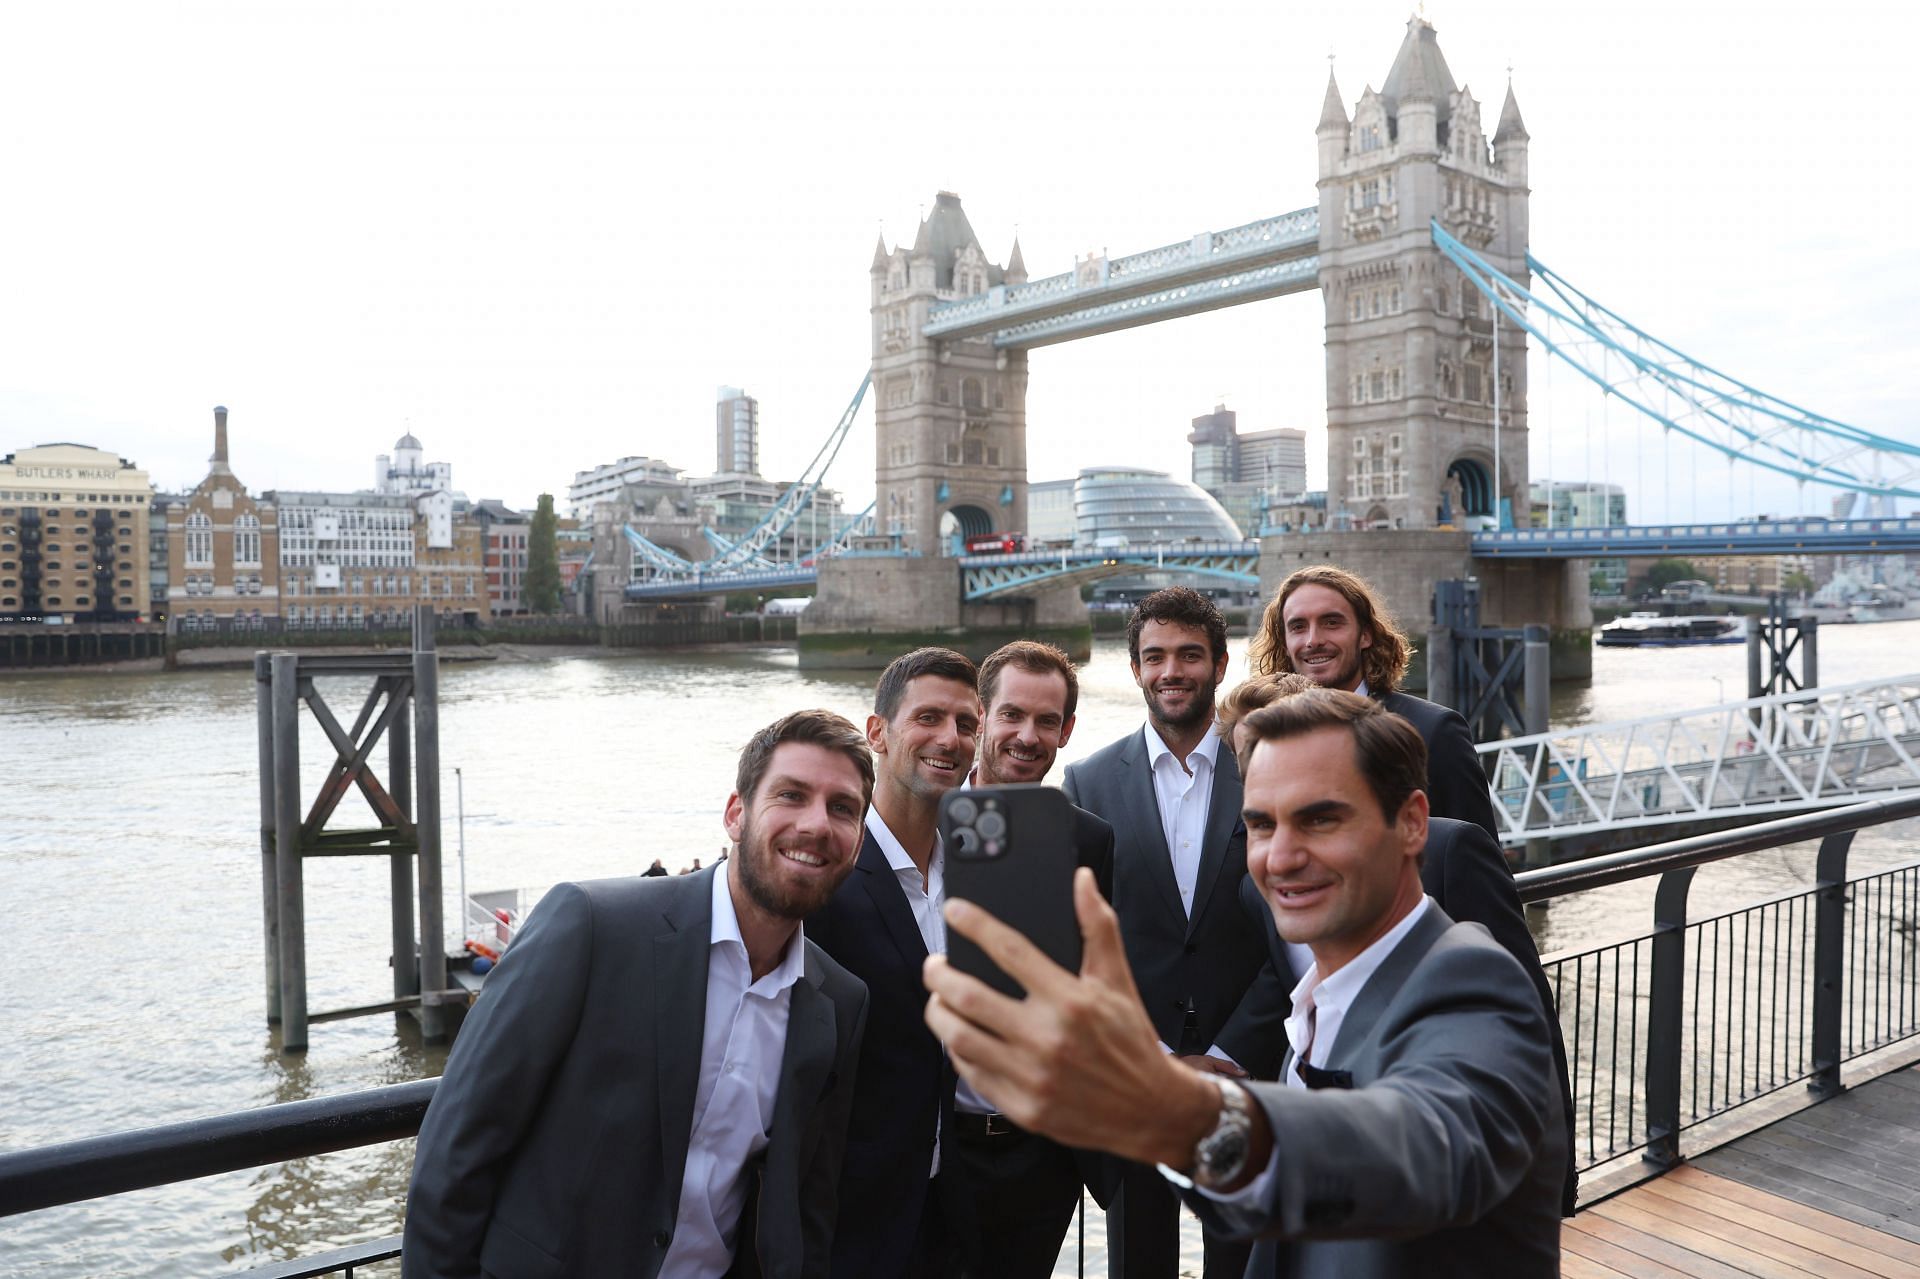 Cameron Norrie, Novak Djokovic, Andy Murray, Matteo Berrettini, Stefanos Tsitsipas and Roger Federer take a selfie in front of Tower Bridge in London.